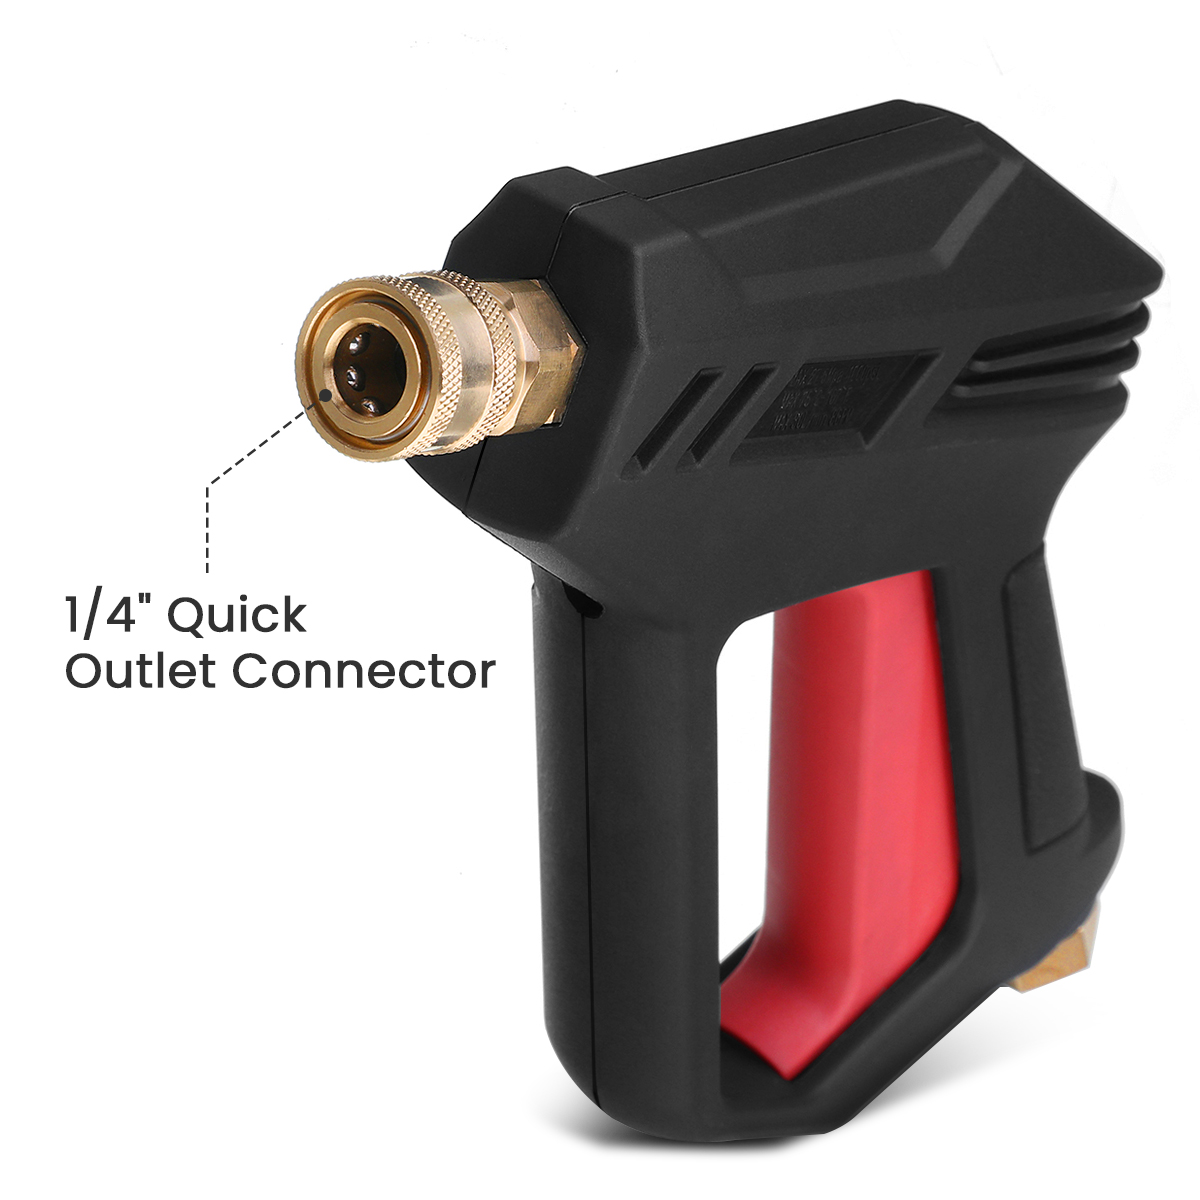 MATCC Pressure Washer Gun Car Power Washer Gun High Pressure Gun 4000 PSI 1/4'' Quick Outlet Connector M22-14mm Inlet Connector 3/8'' Quick Inlet Connector 5 Pressure Washer Nozzles